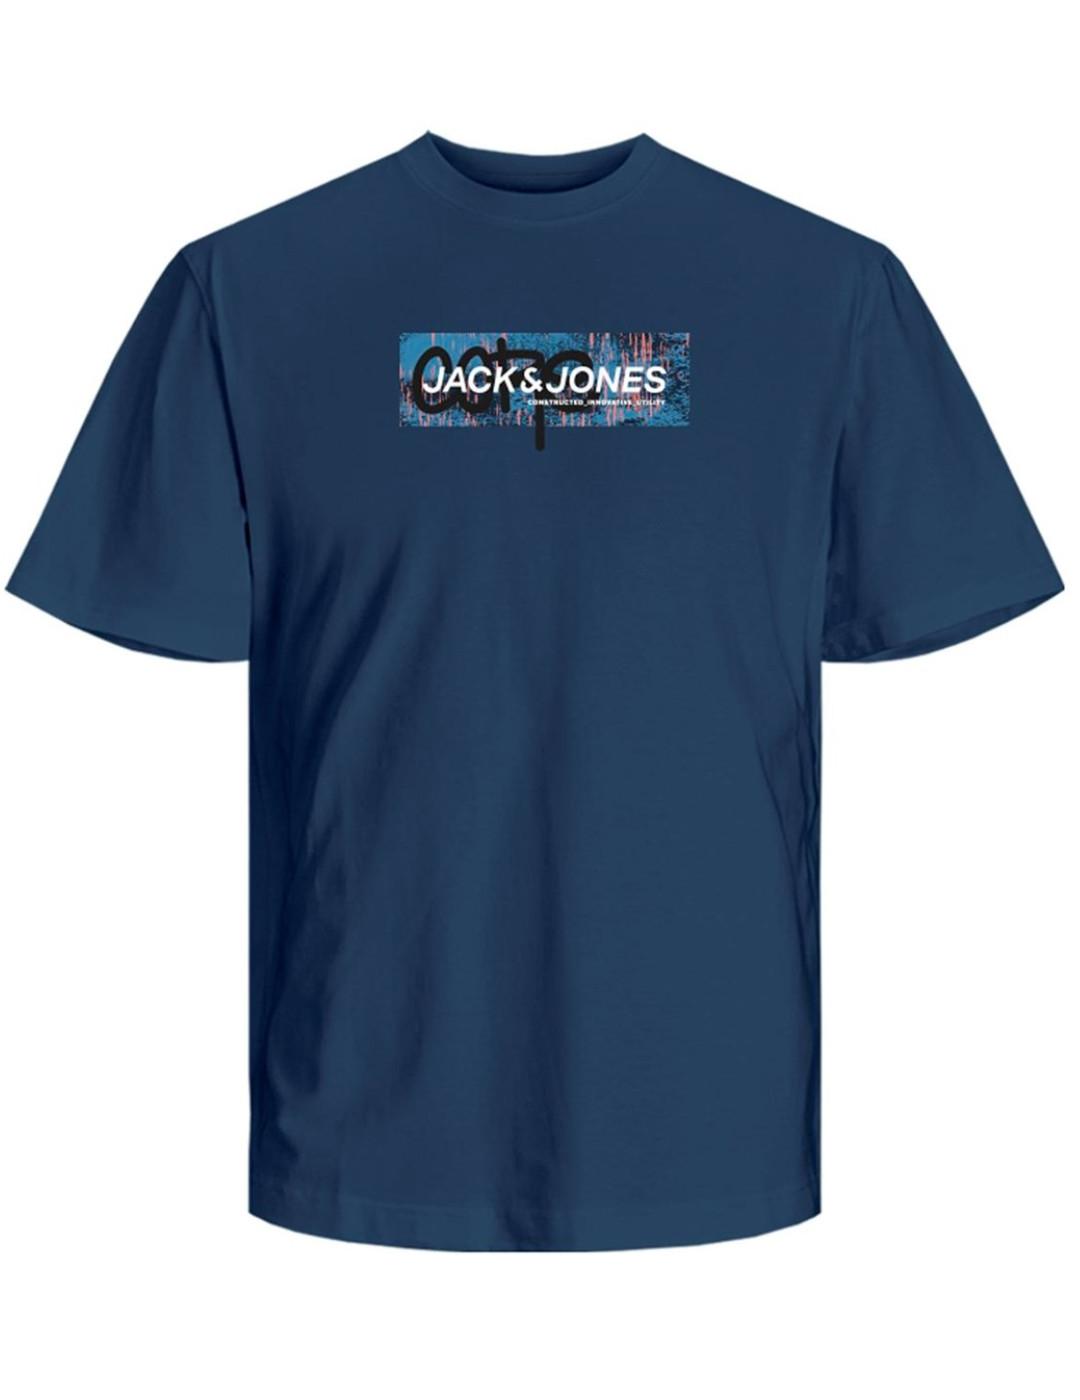 Camiseta Jack&Jones Aop azul manga corta para hombre